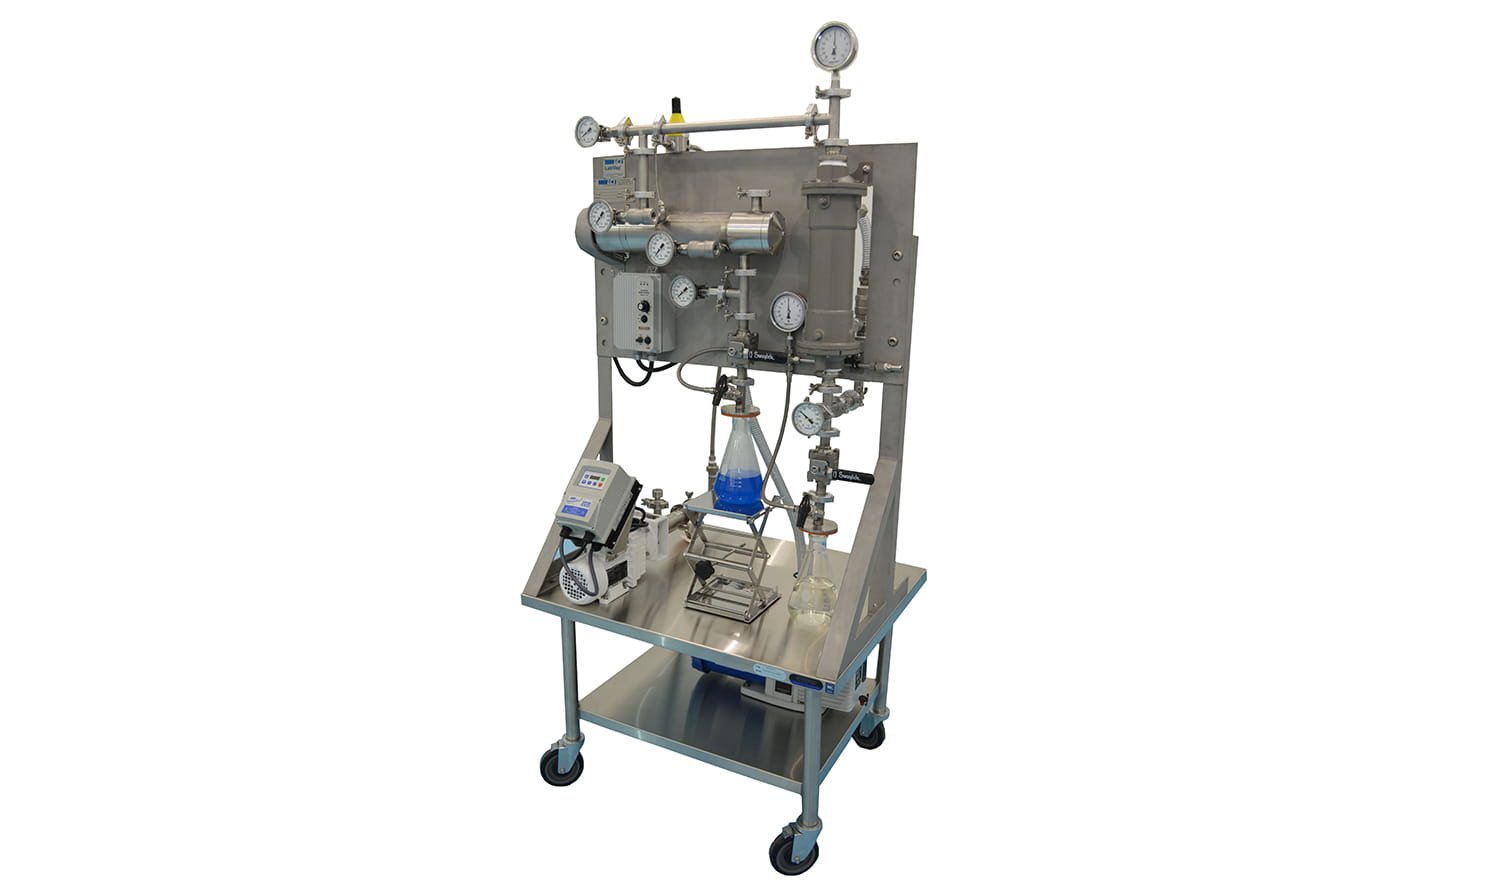 LabVap laboratory evaporator